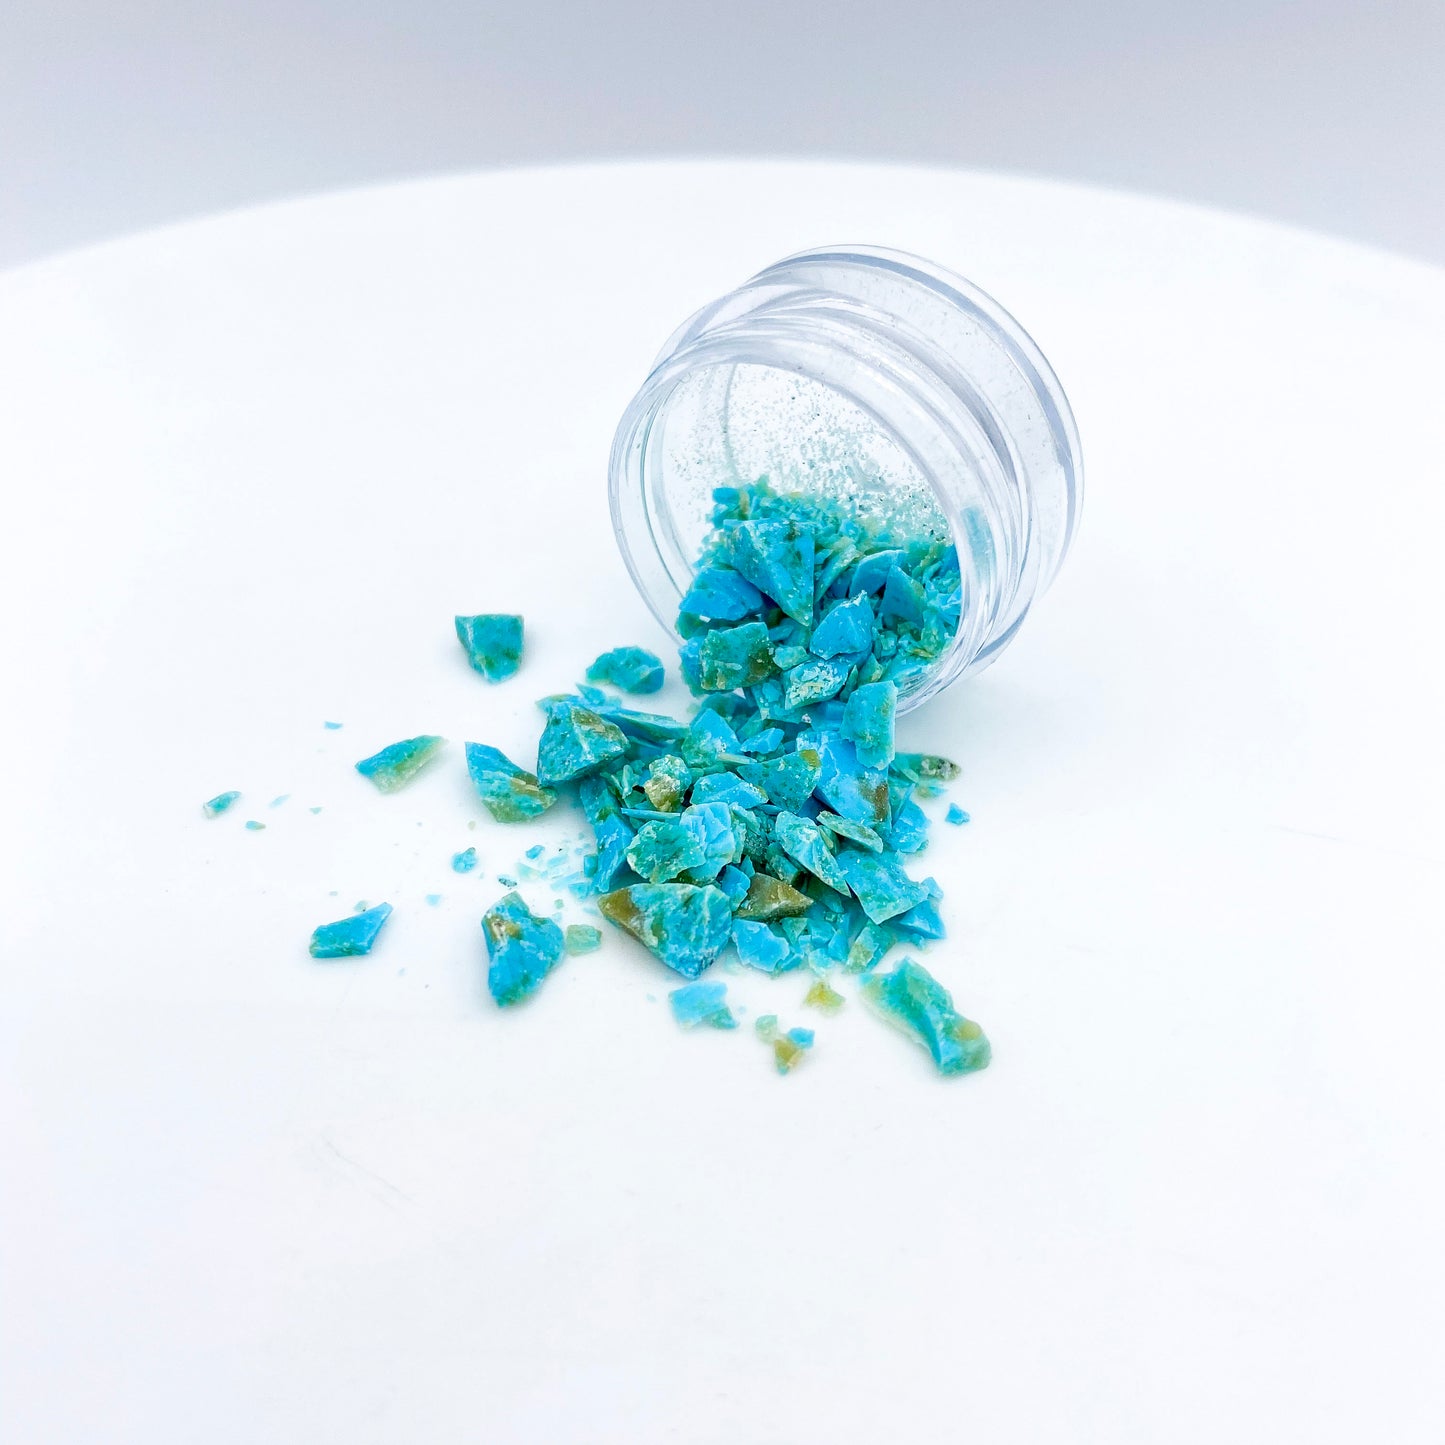 Turquoise Fragments - Patrick Adair Supplies